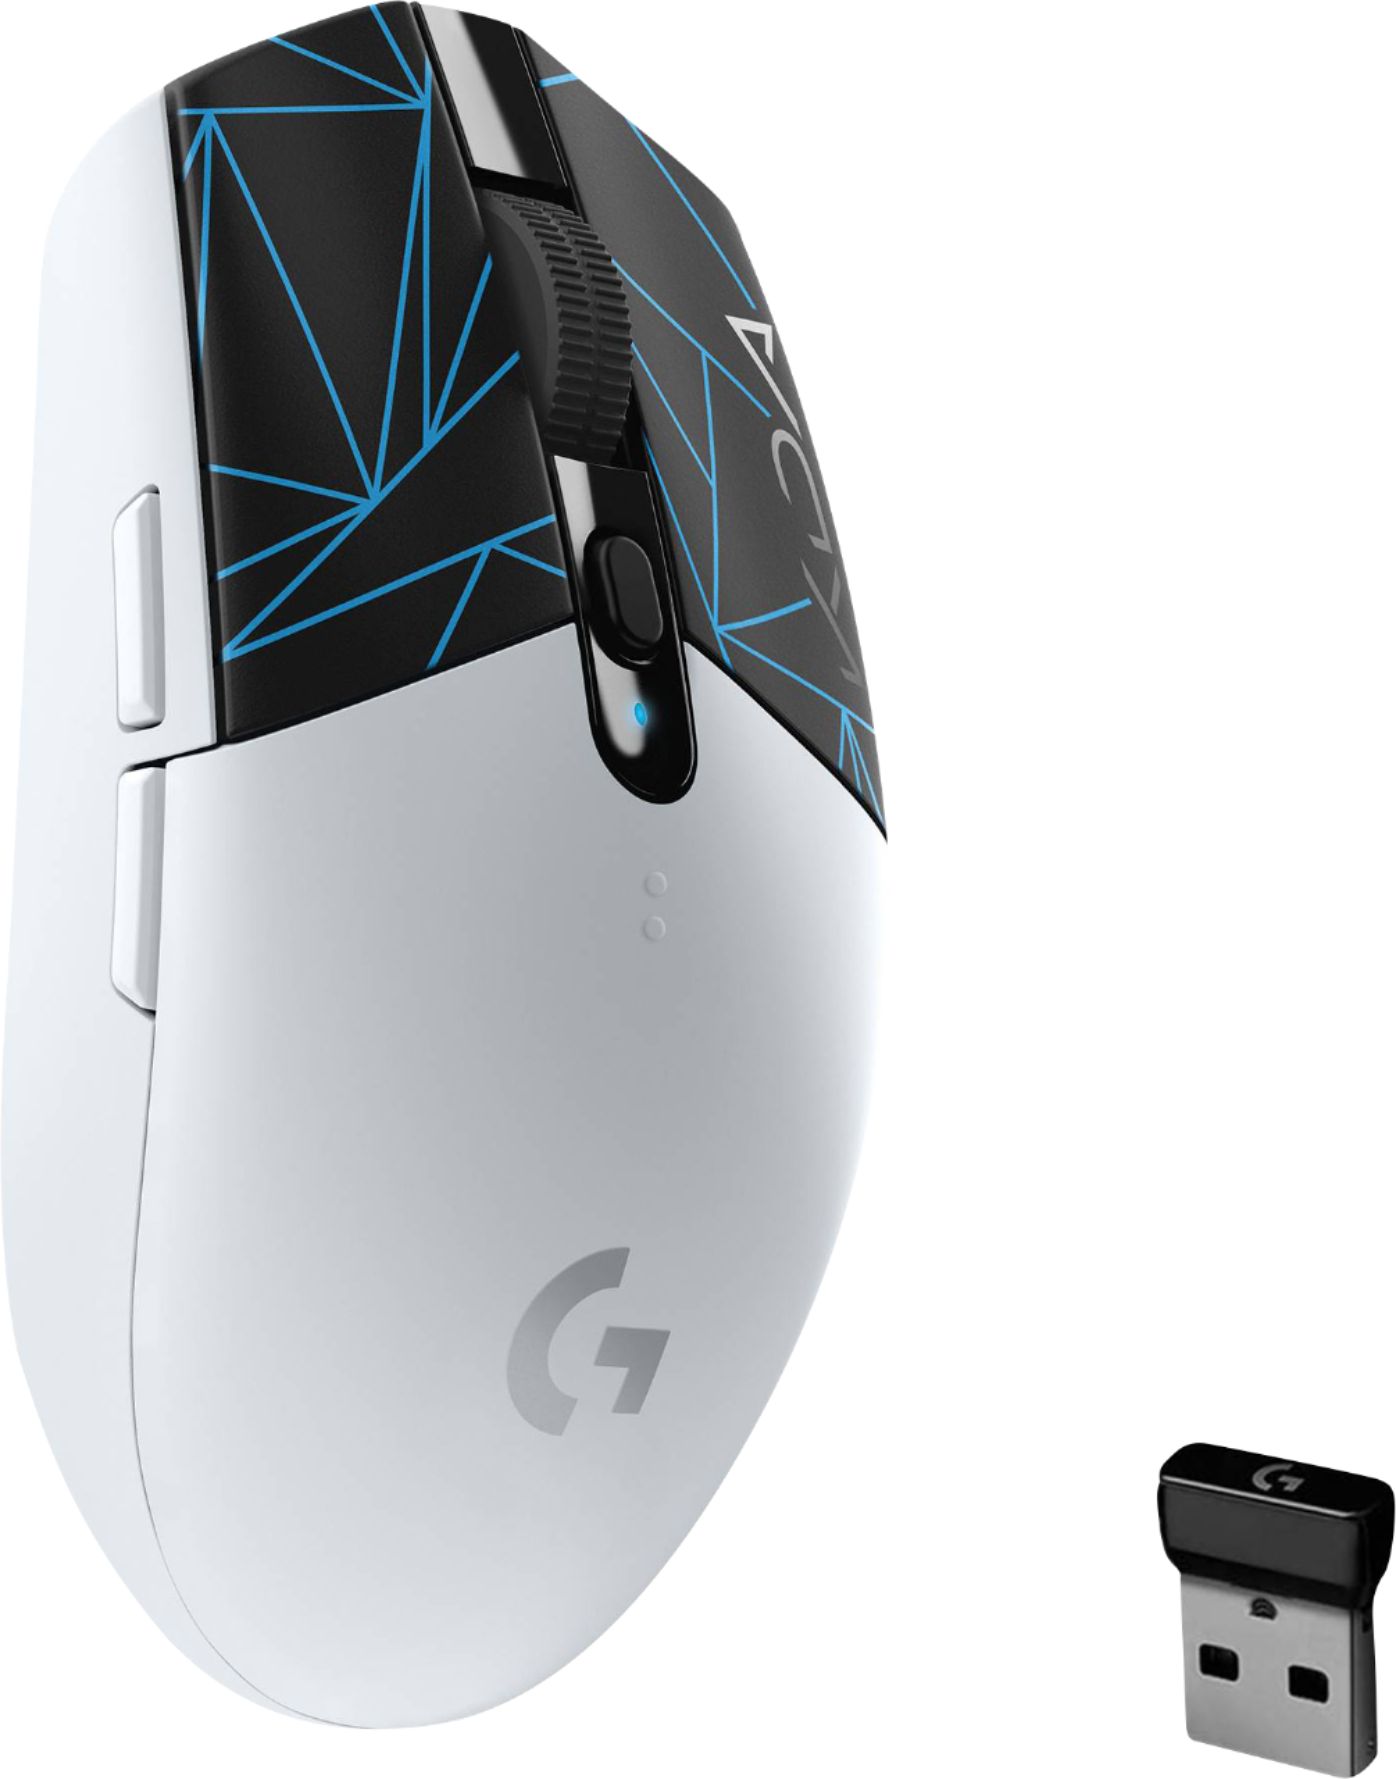 Angle View: Logitech - G305 LIGHTSPEED Wireless Optical 6 Programmable Button Gaming Mouse with 12,000 DPI HERO Sensor - K/DA, White